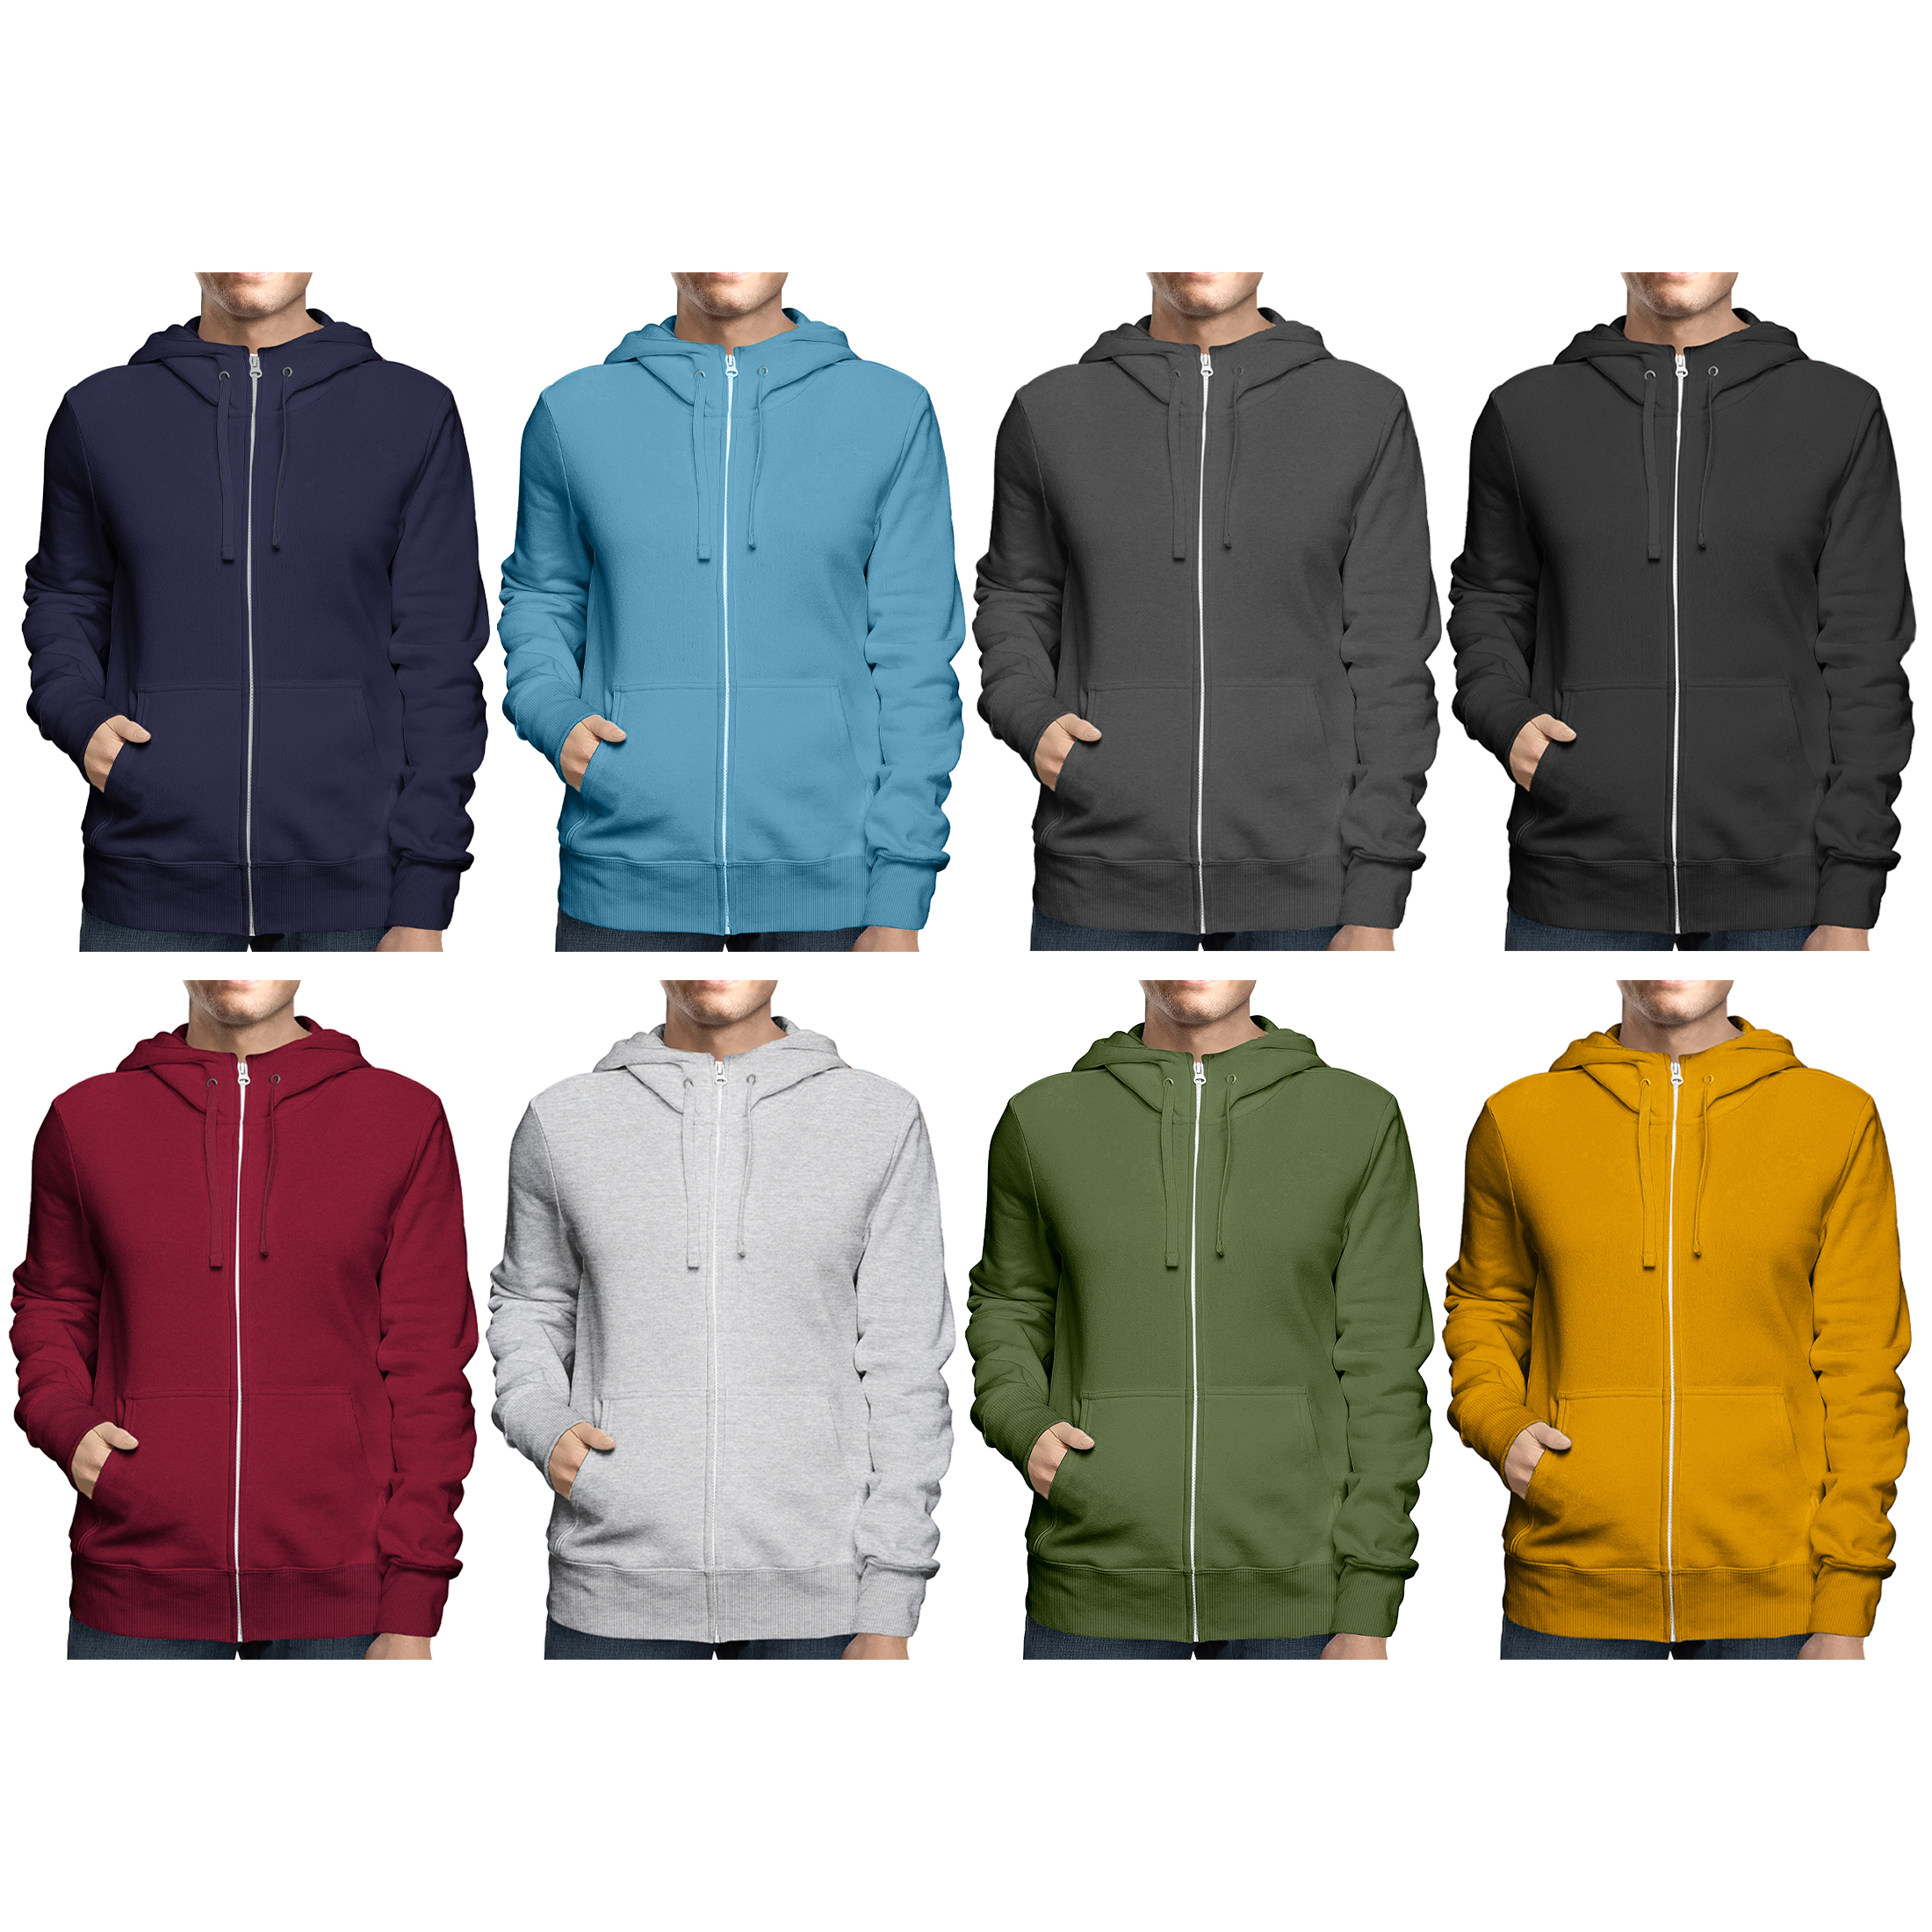 2-Pack: Men's Full Zip Up Fleece-Lined Hoodie Sweatshirt (Big & Tall Size Available) - Navy & Burgundy, Large